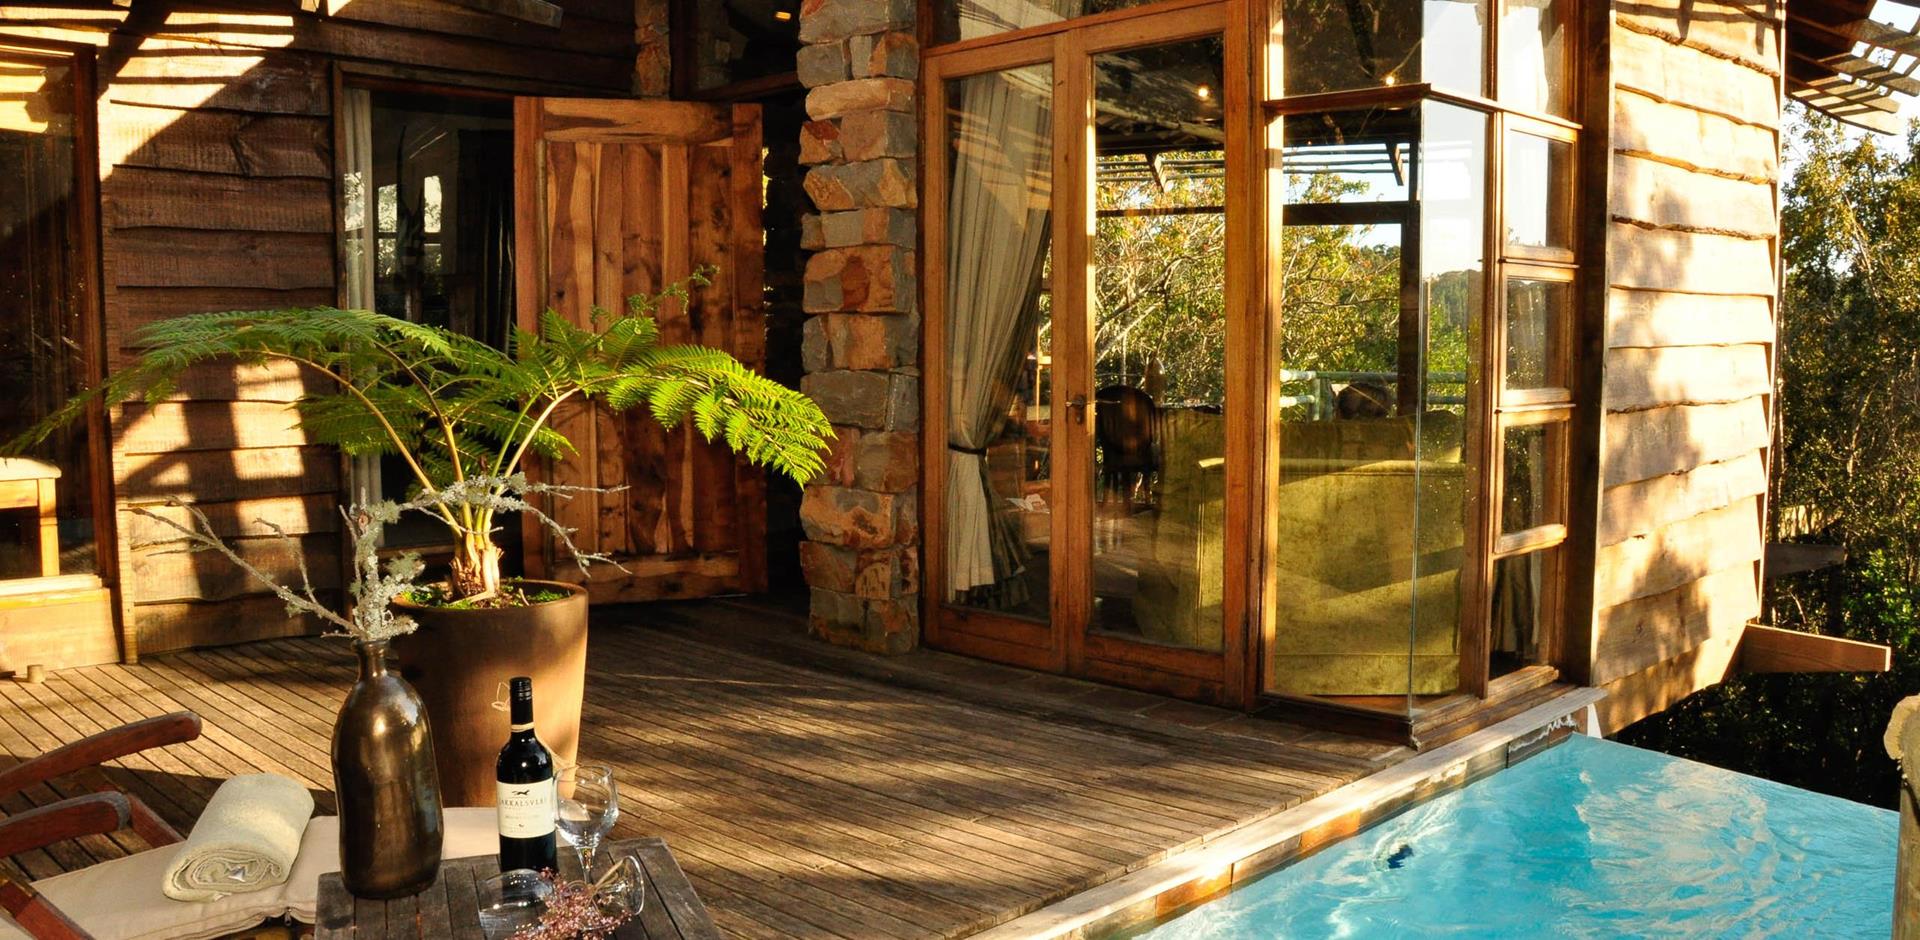 Poolside, Tsala Treetop Lodge, South Africa, A&K